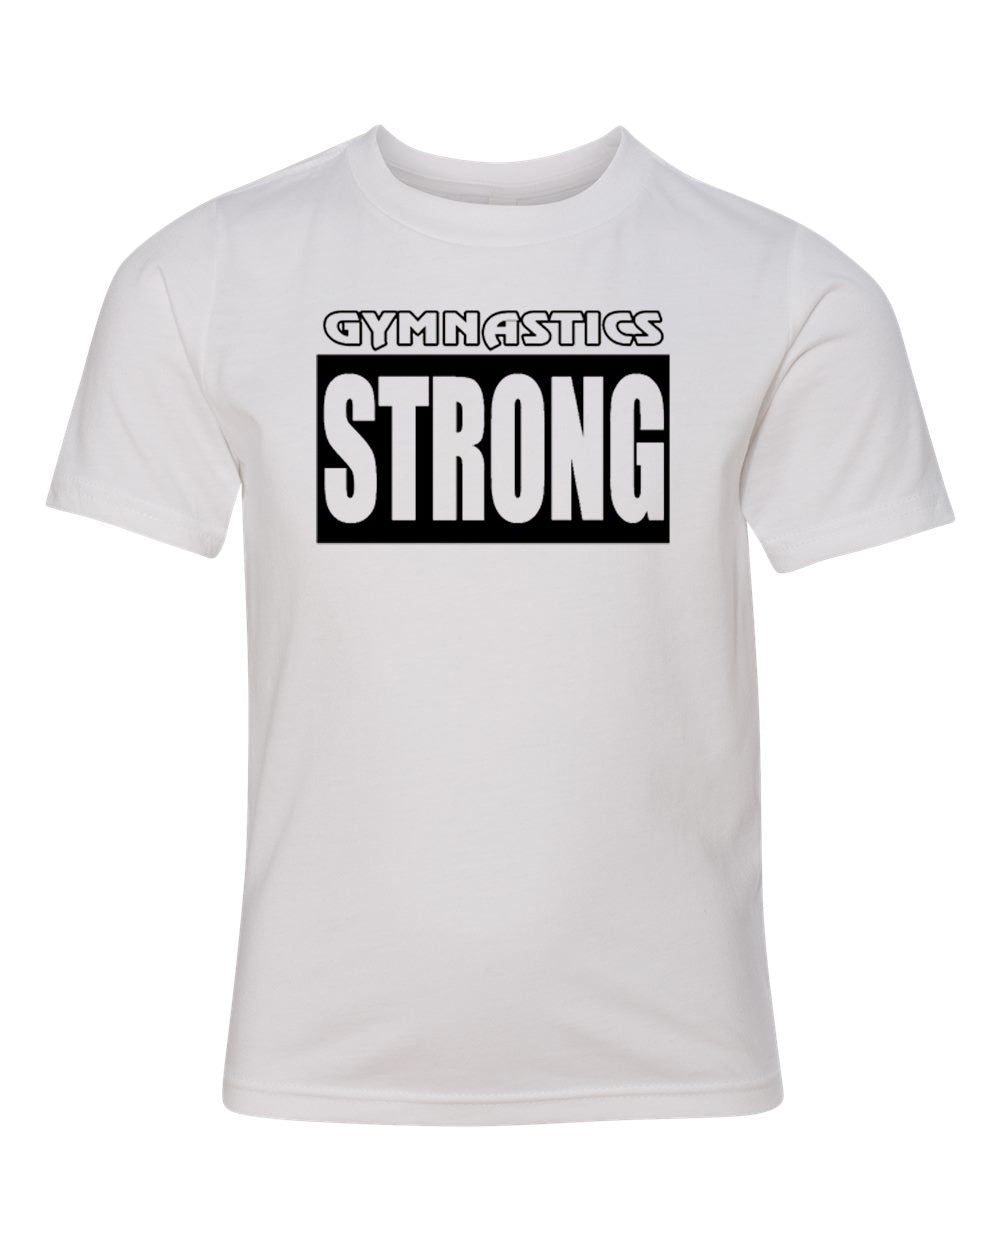 Gymnastics Strong Youth T-Shirt